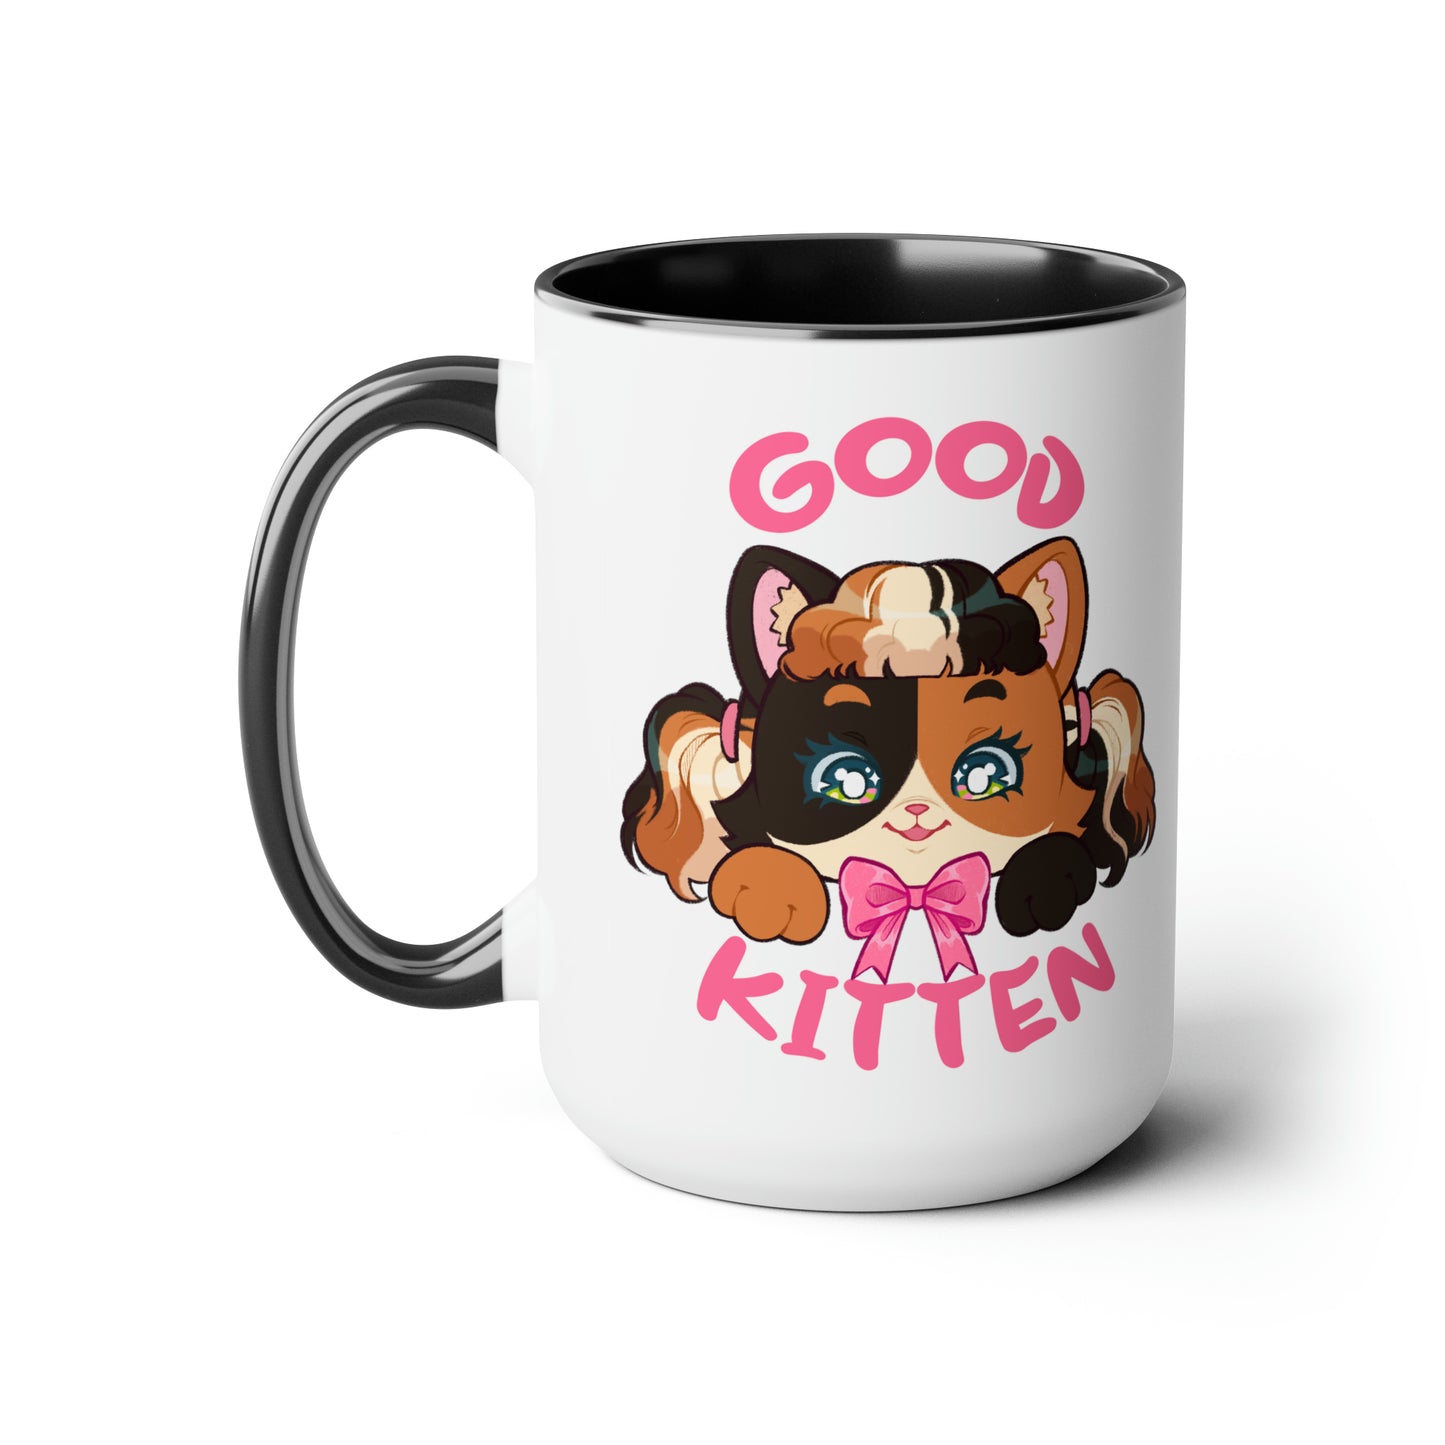 Good Kitten Two-Tone Mugs, 15oz